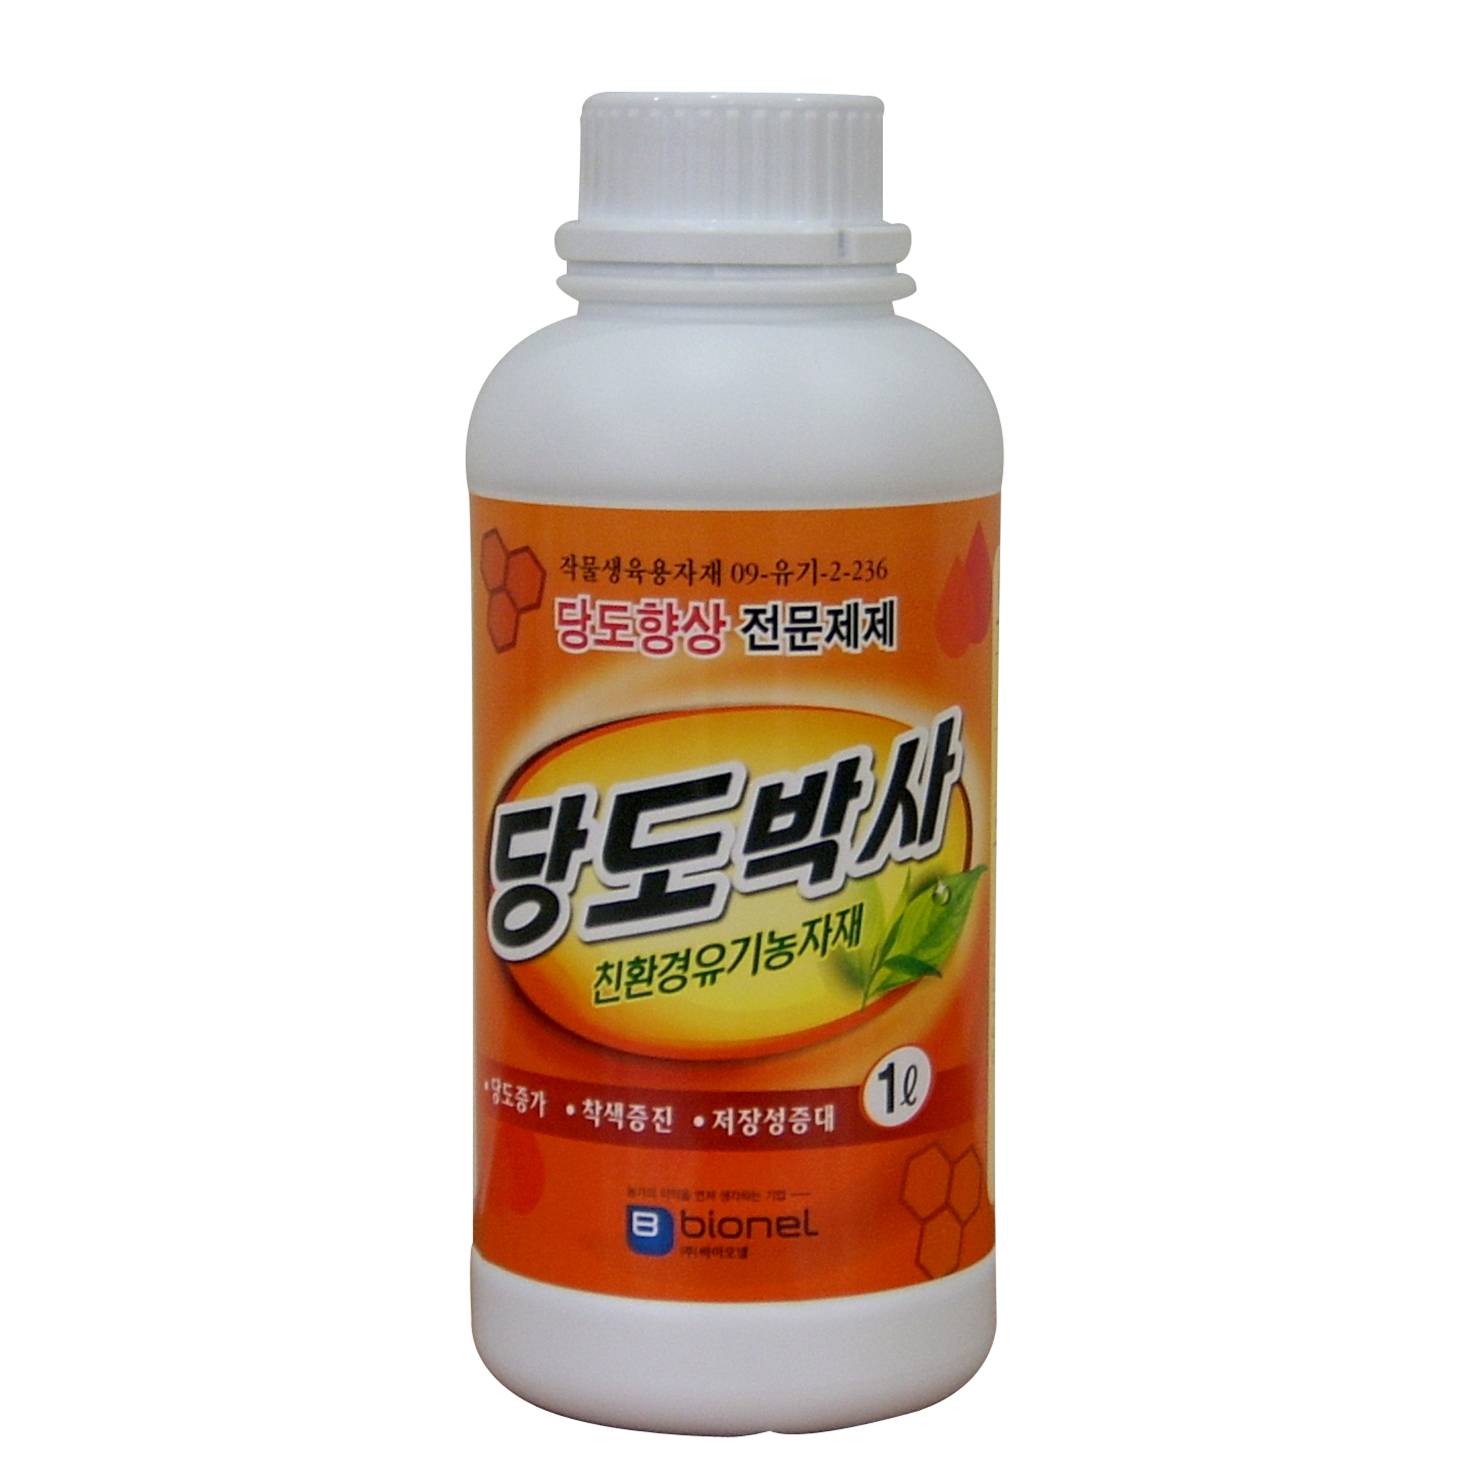 Dr. Sugar  Made in Korea